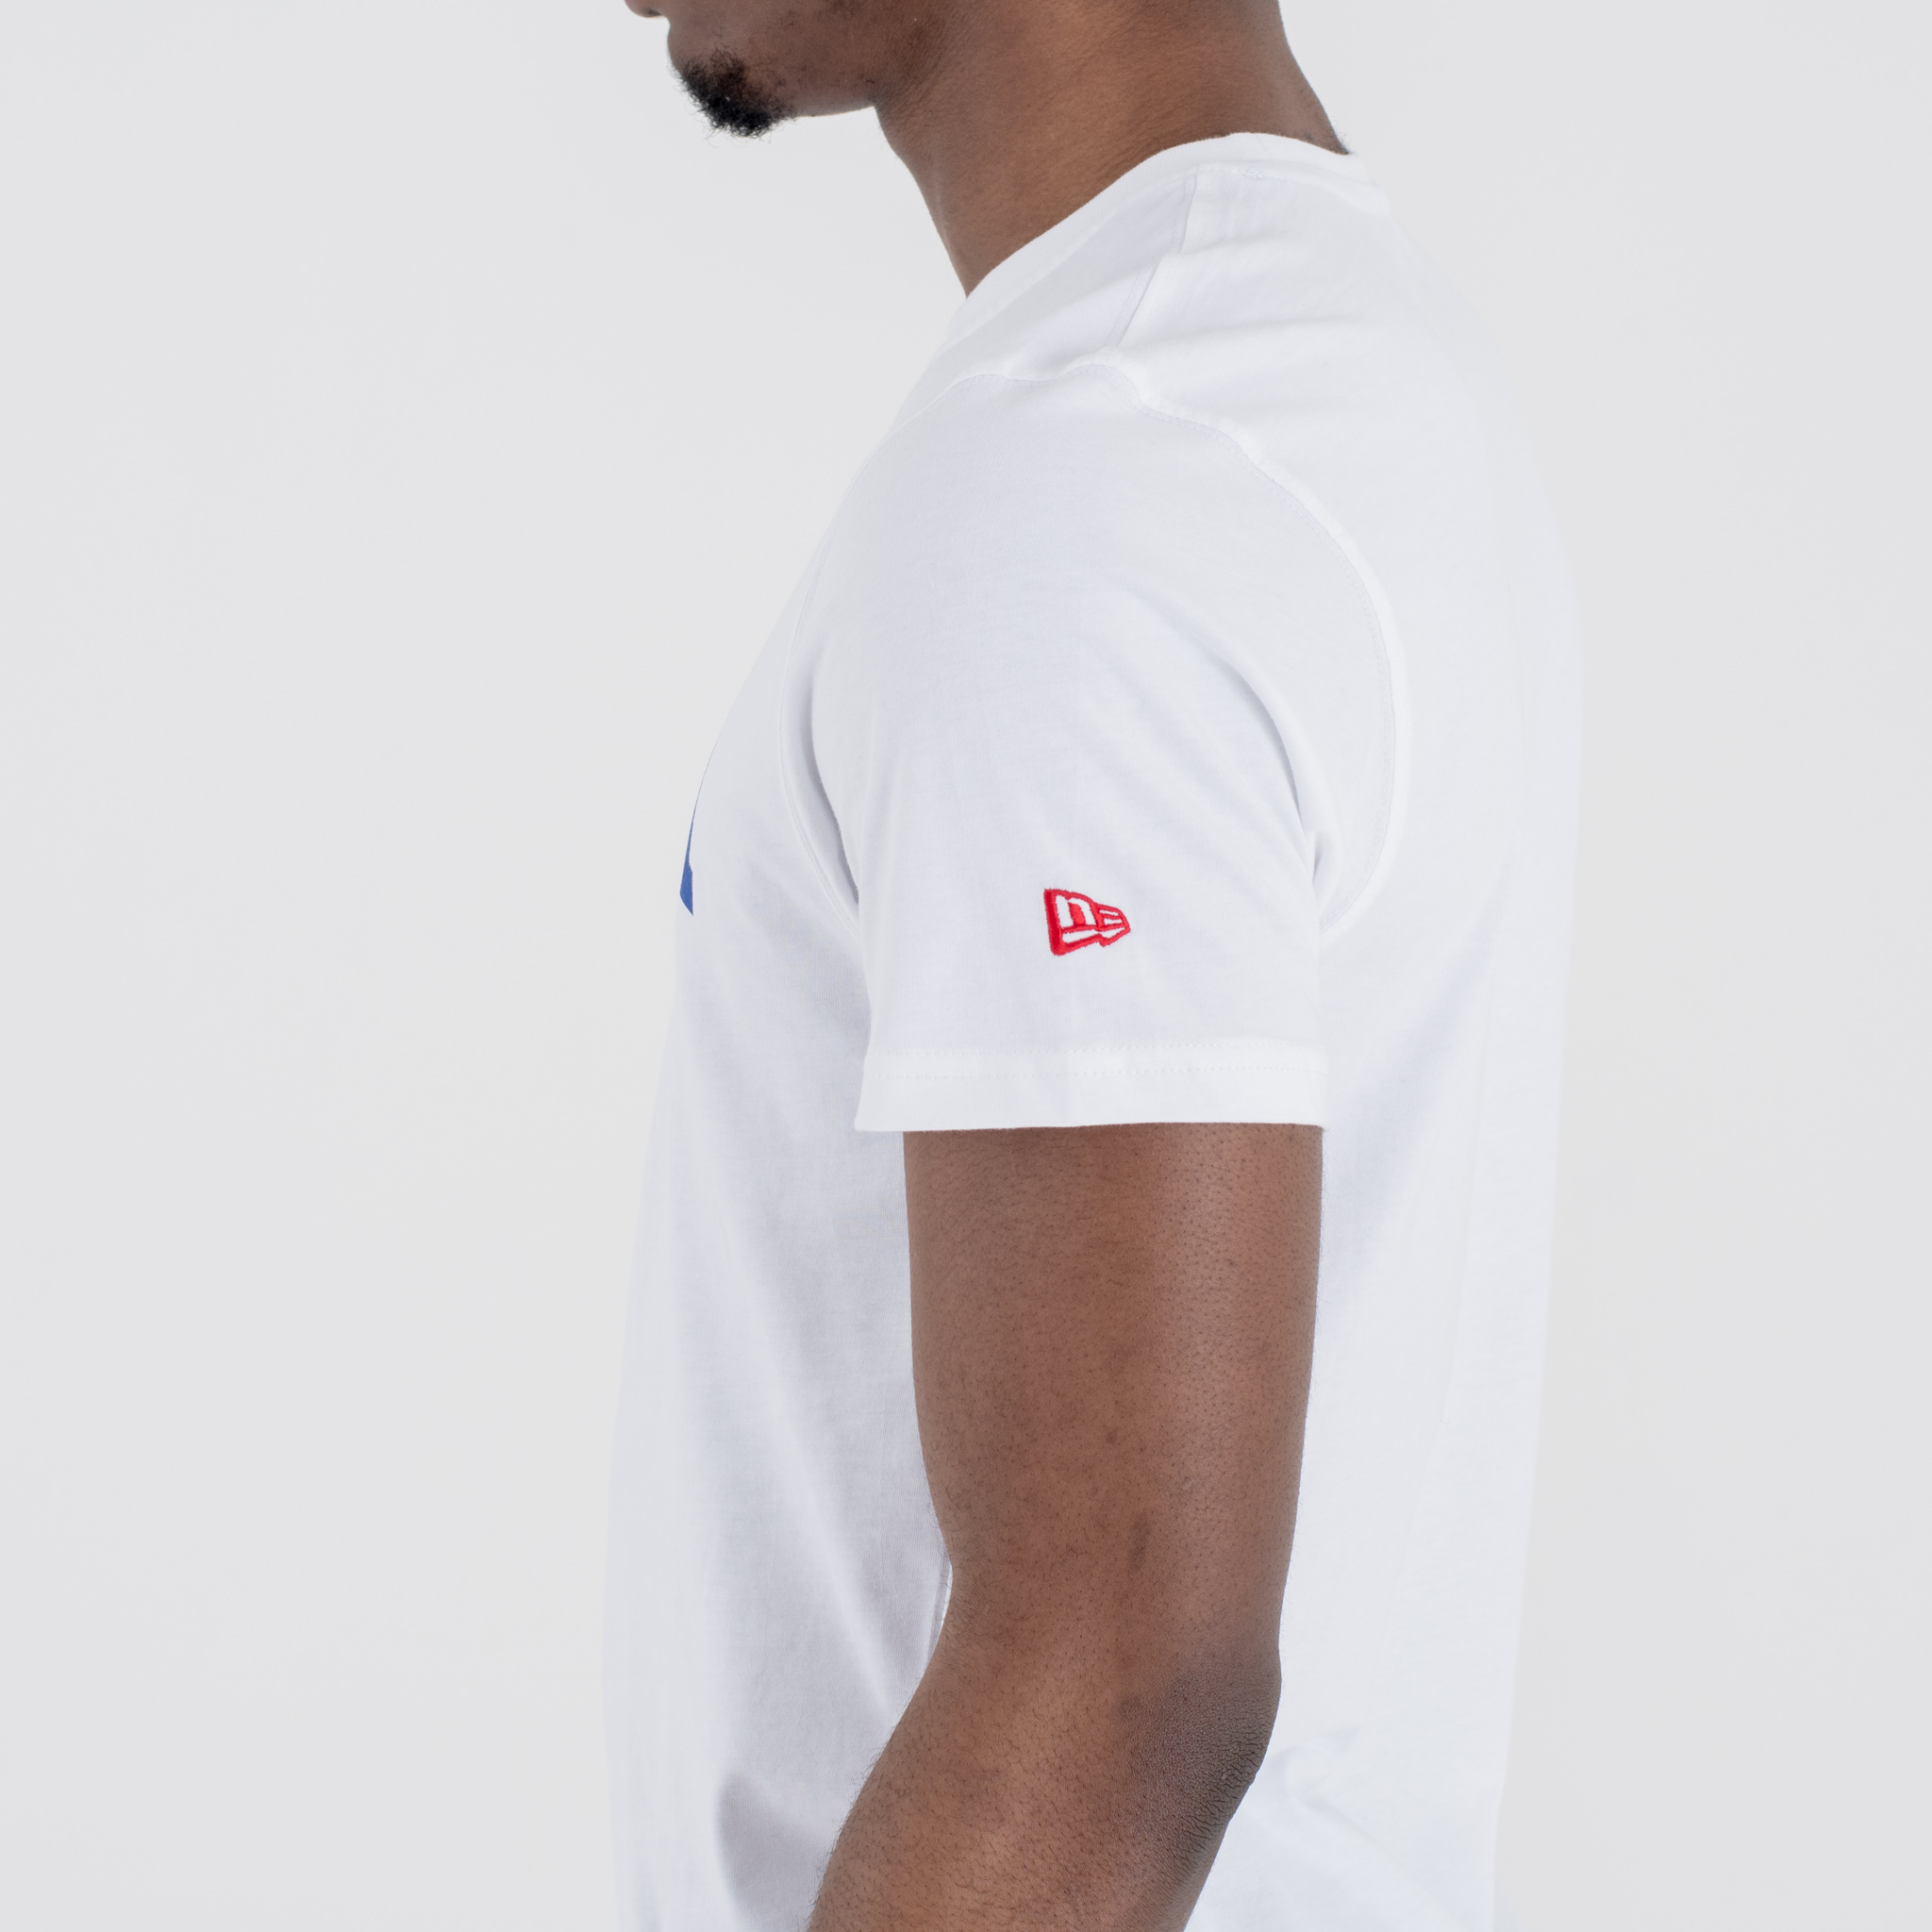 Philadelphia 76ers NBA Team Logo White T-Shirt